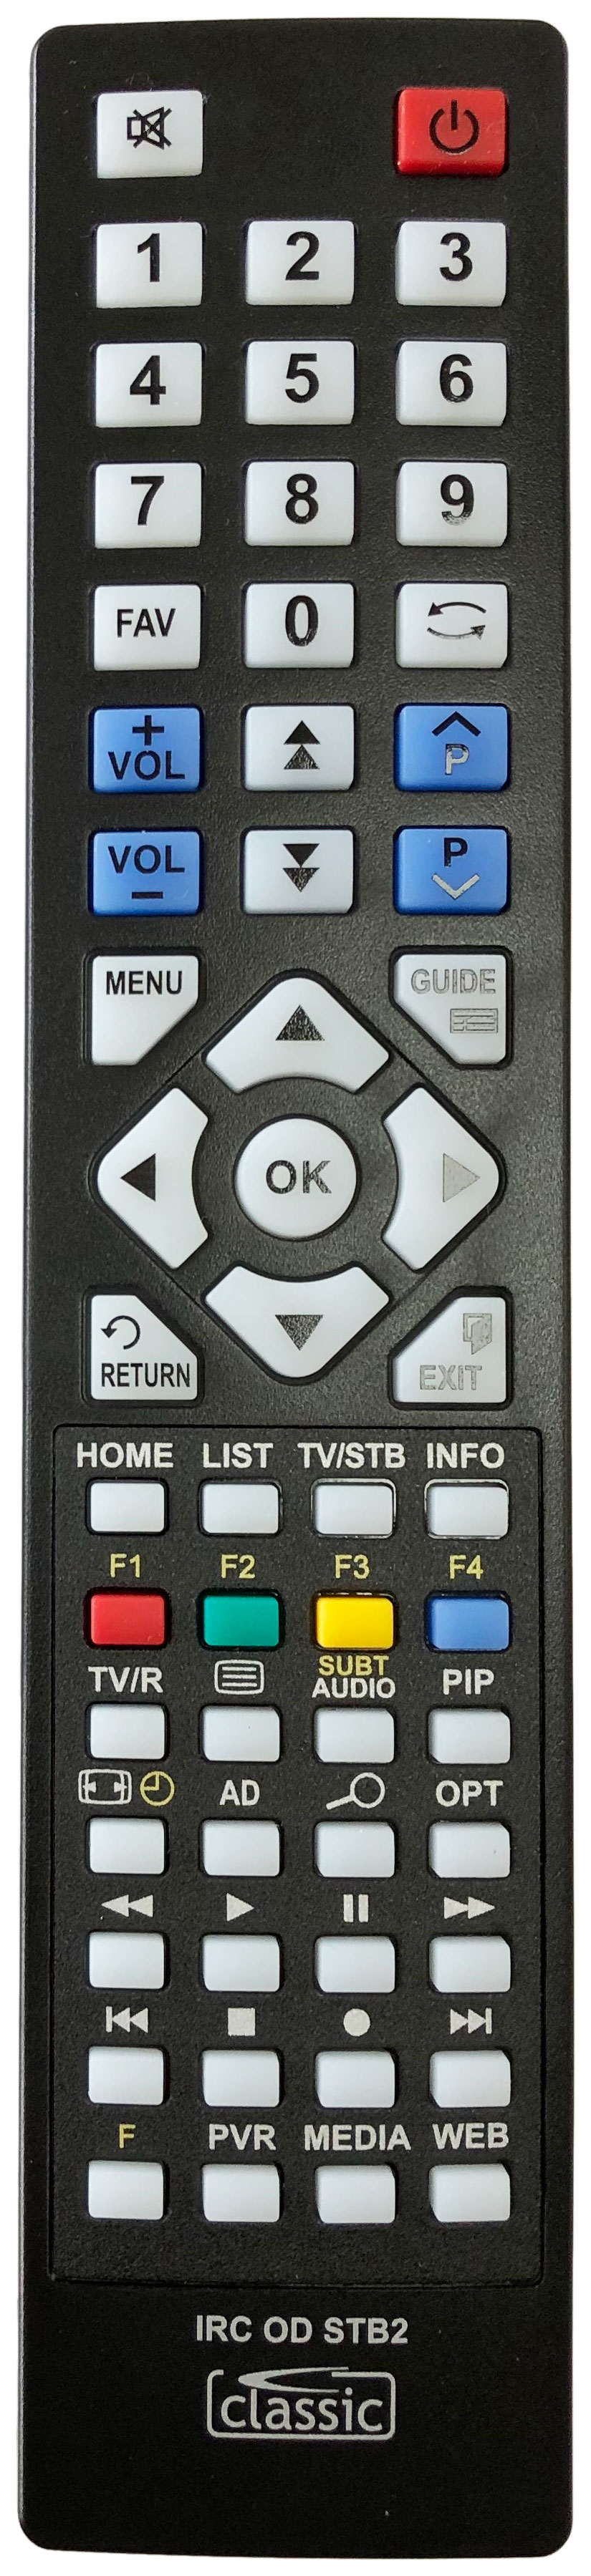 MANHATTAN PLAZA HD-S2 VERS.1 Remote Control